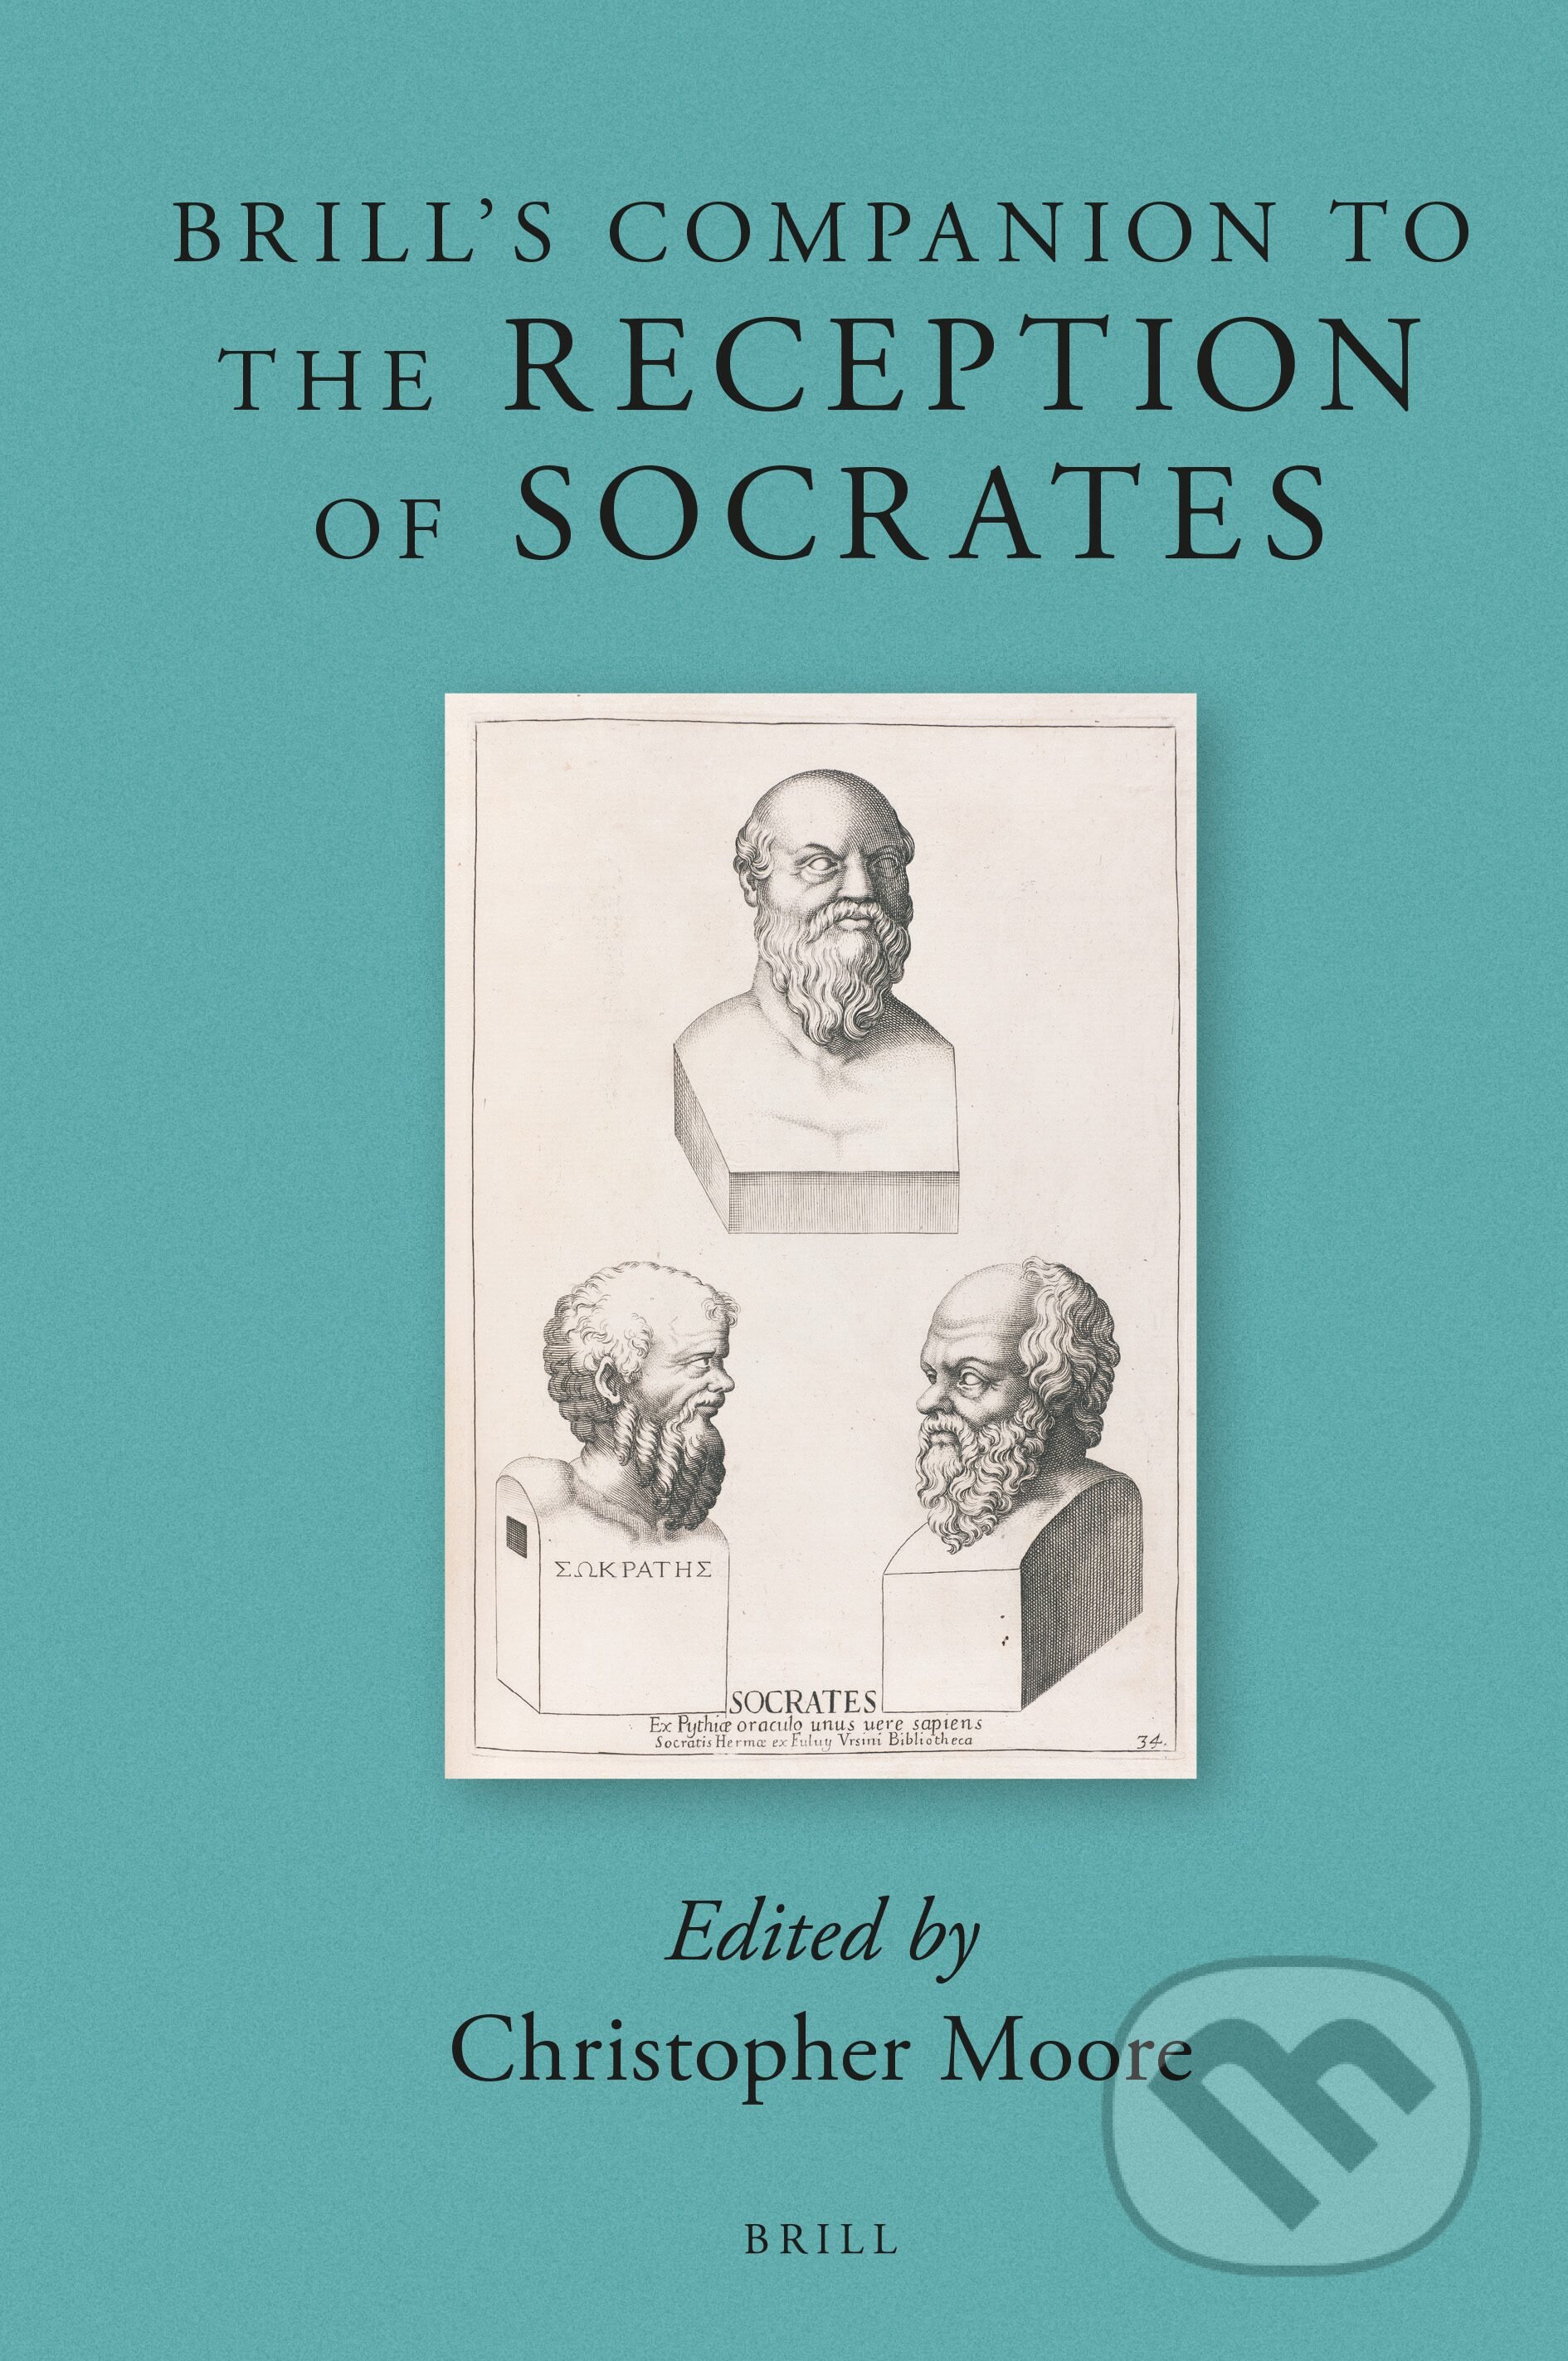 Brill&#039;s Companion to the Reception of Socrates - Christopher Moore, Brill, 2019